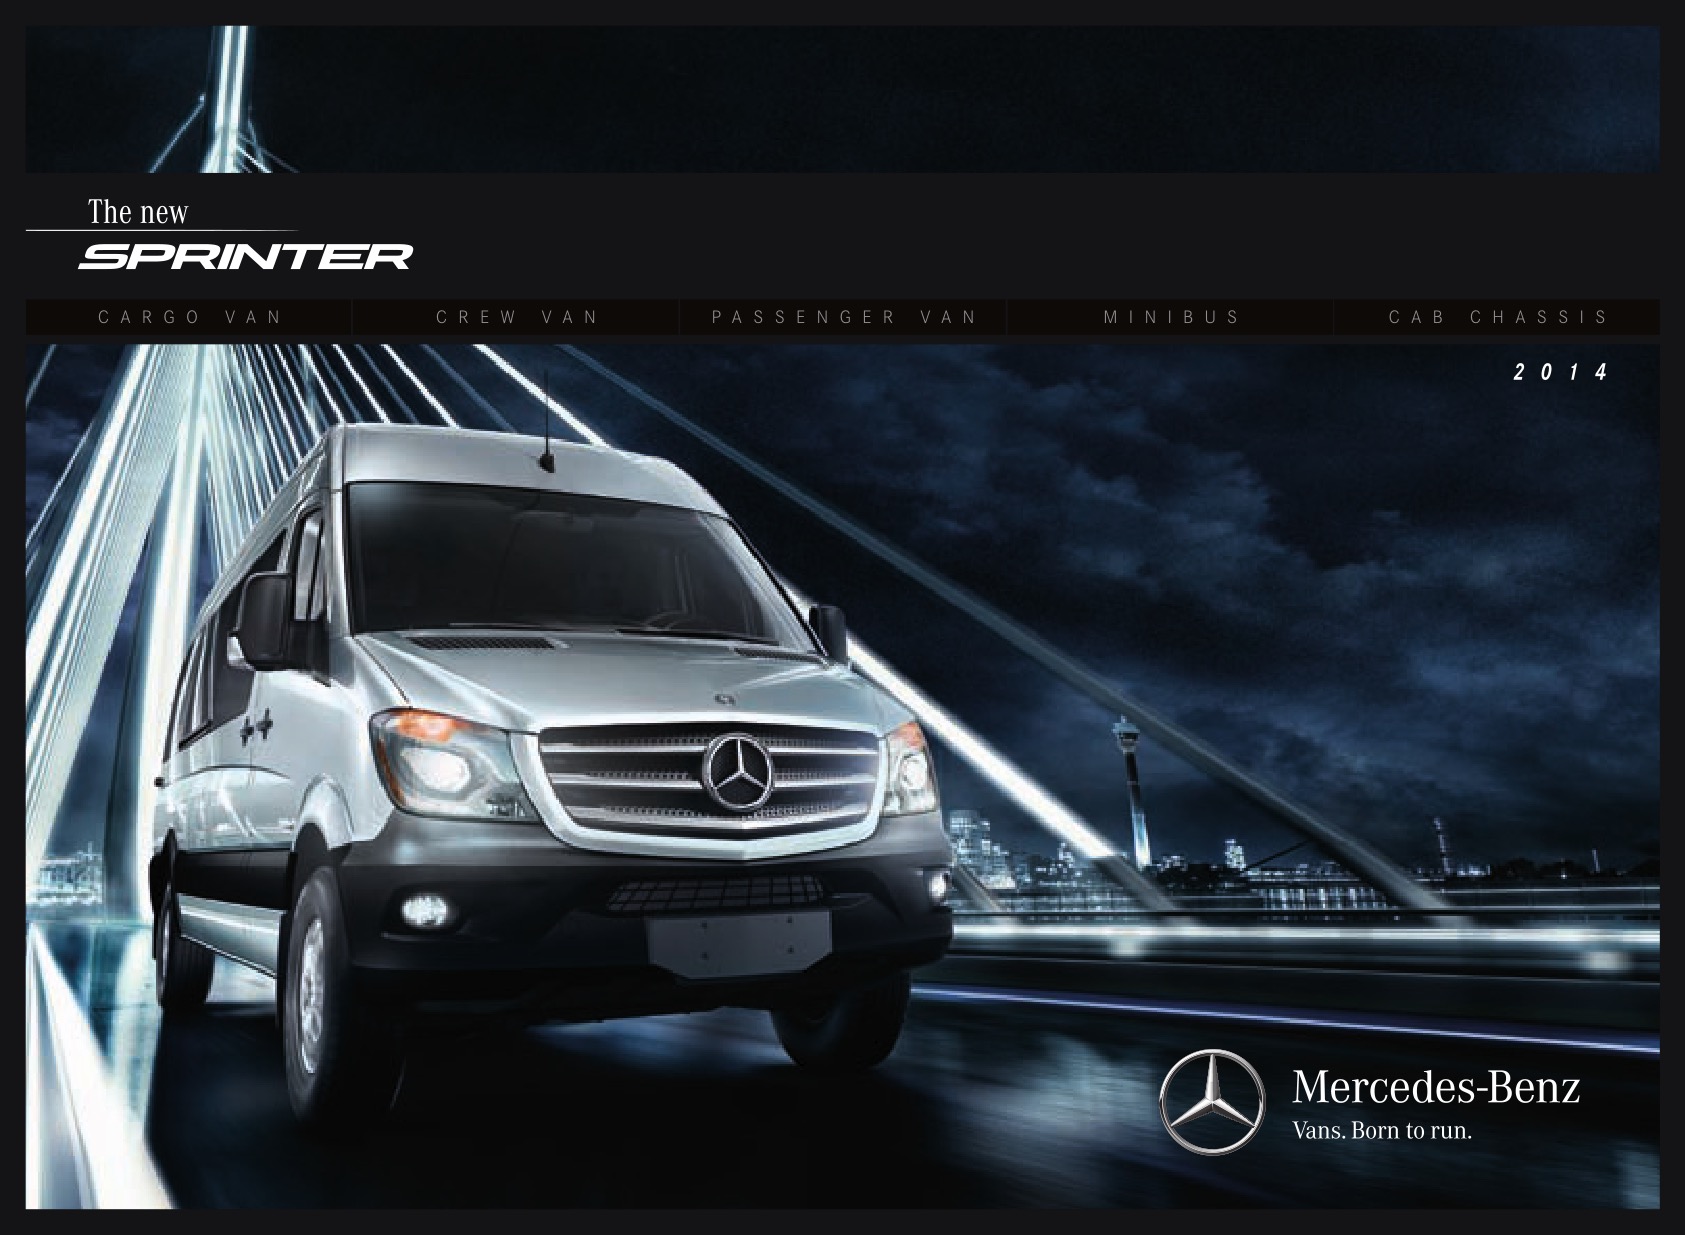 2014 Mercedes-Benz Sprinter Brochure